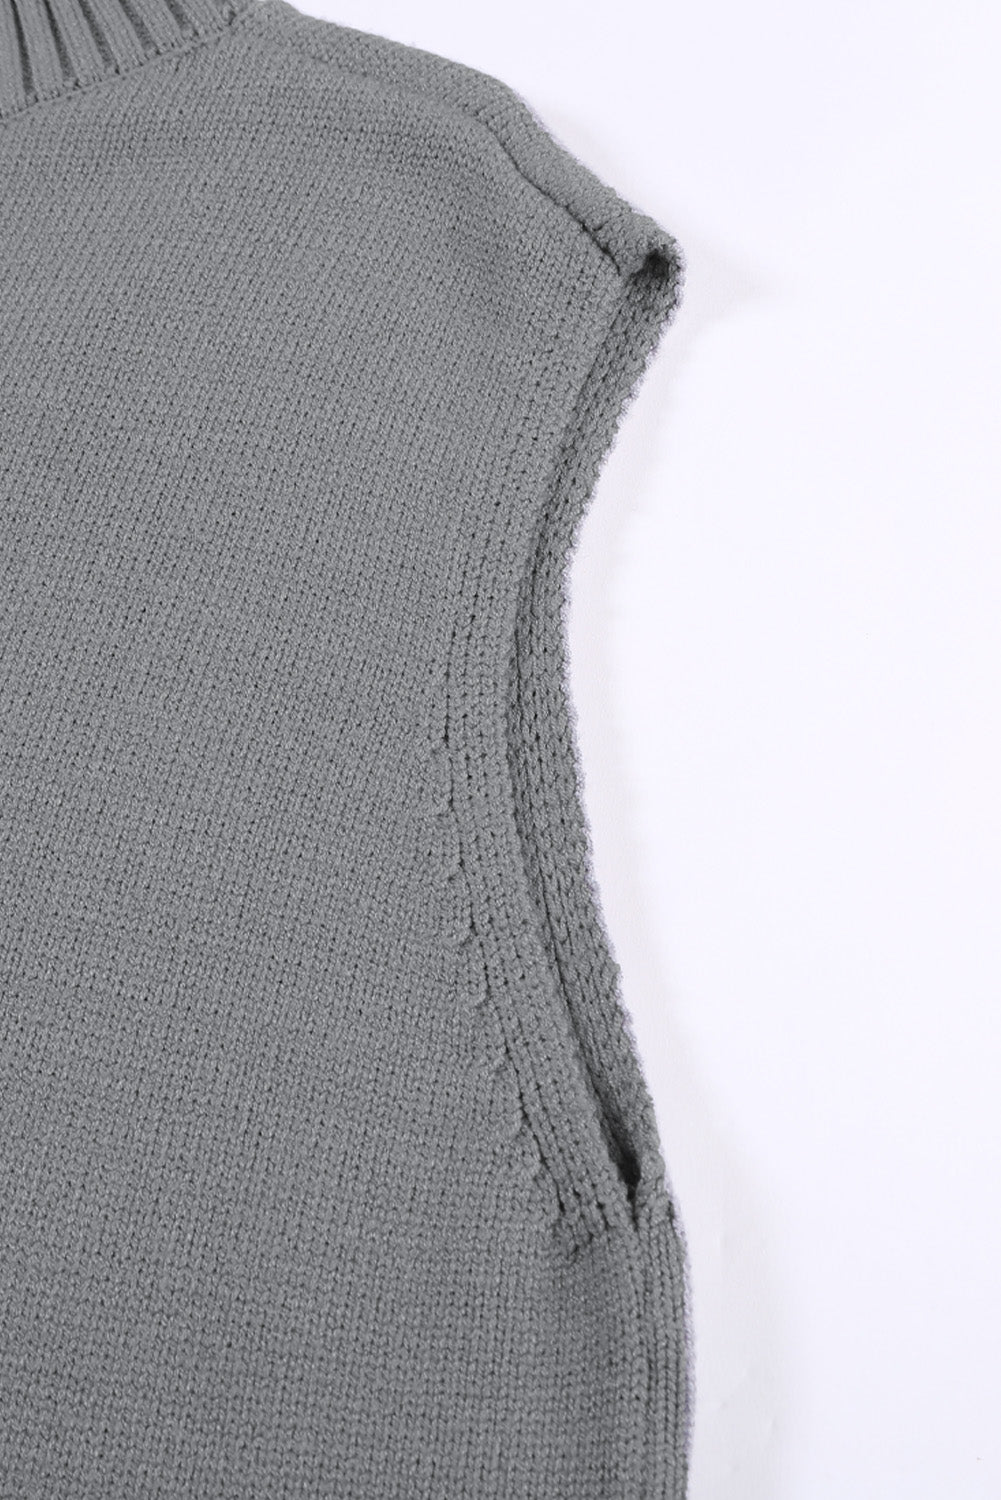 Dark Blue Knit Vest Pullover Sweater